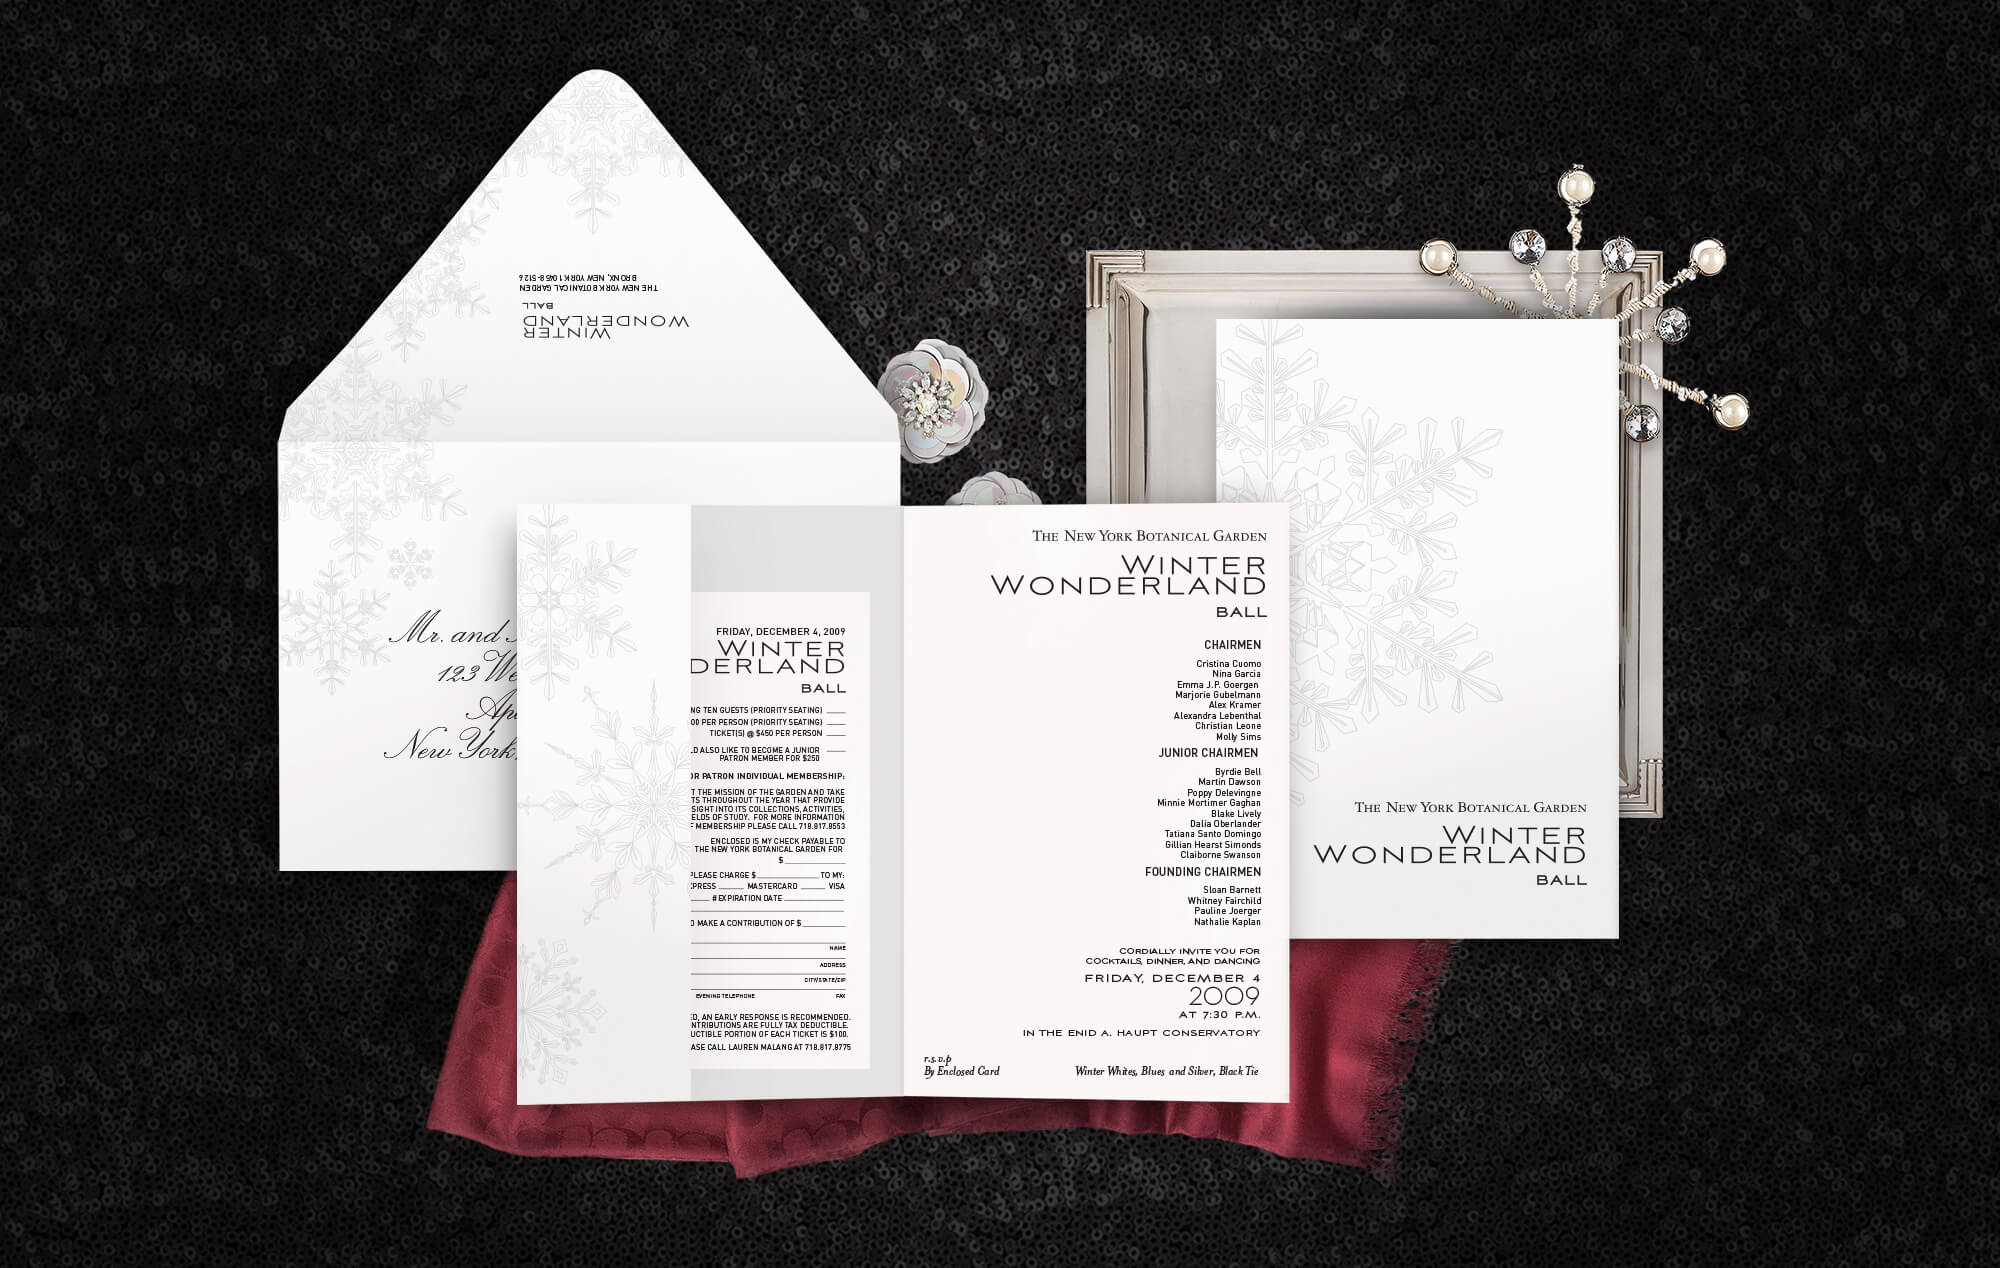 Winter wonderland gala invitation with snowflakes